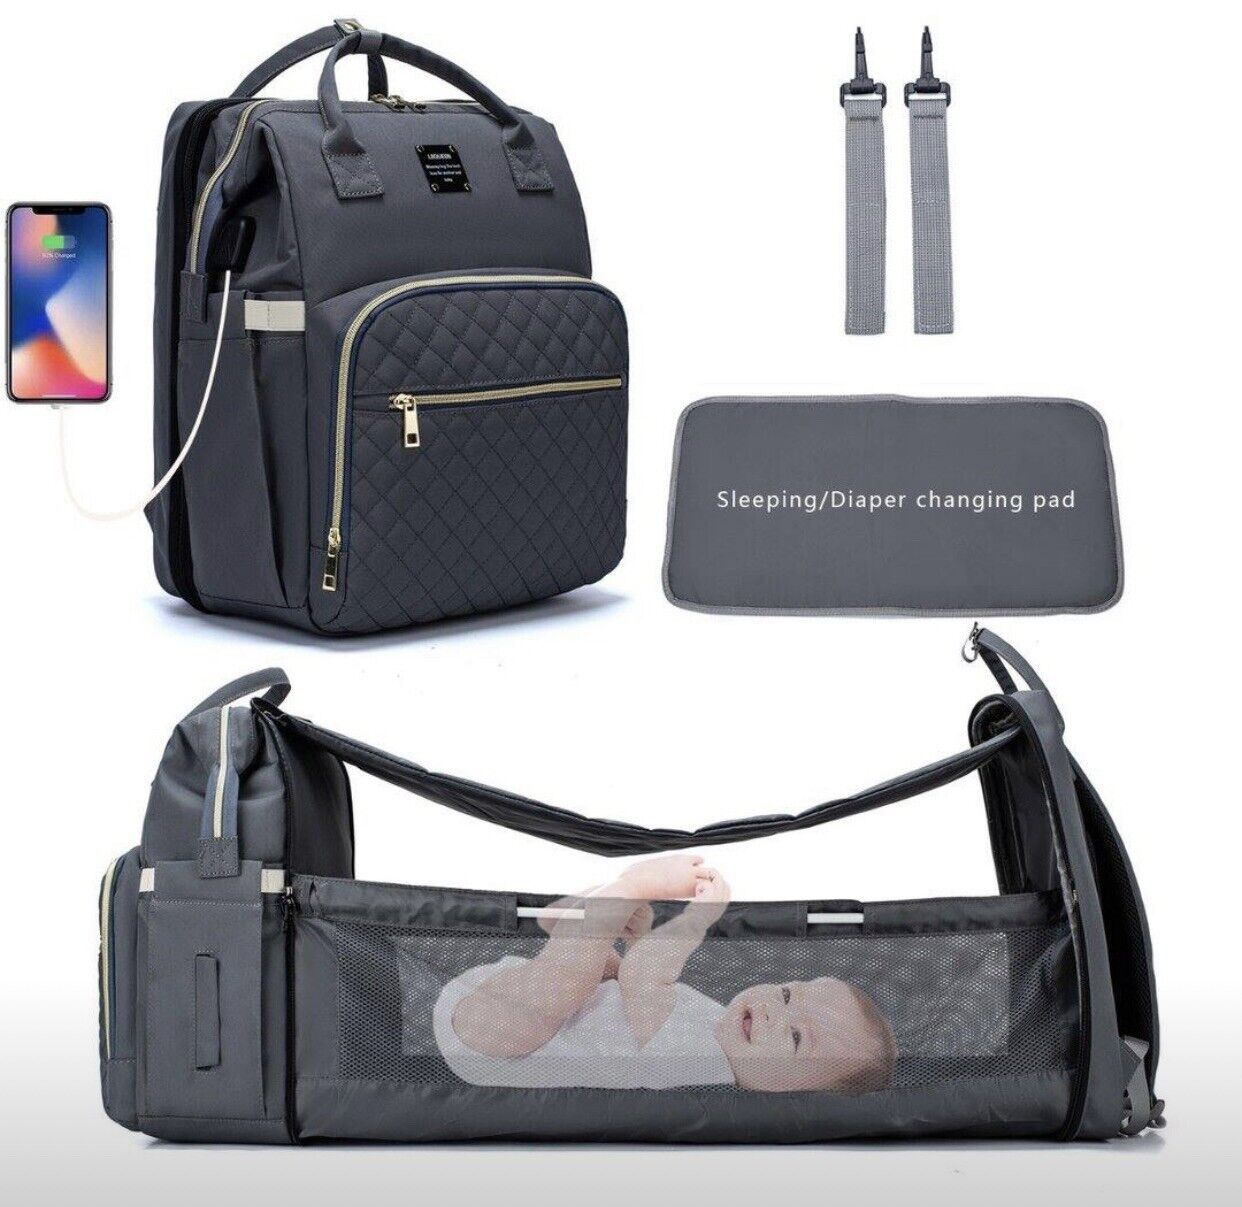 QuiltedBackpack Baby Diaper Bag + Warmer Travel Bassinet Bed - Black